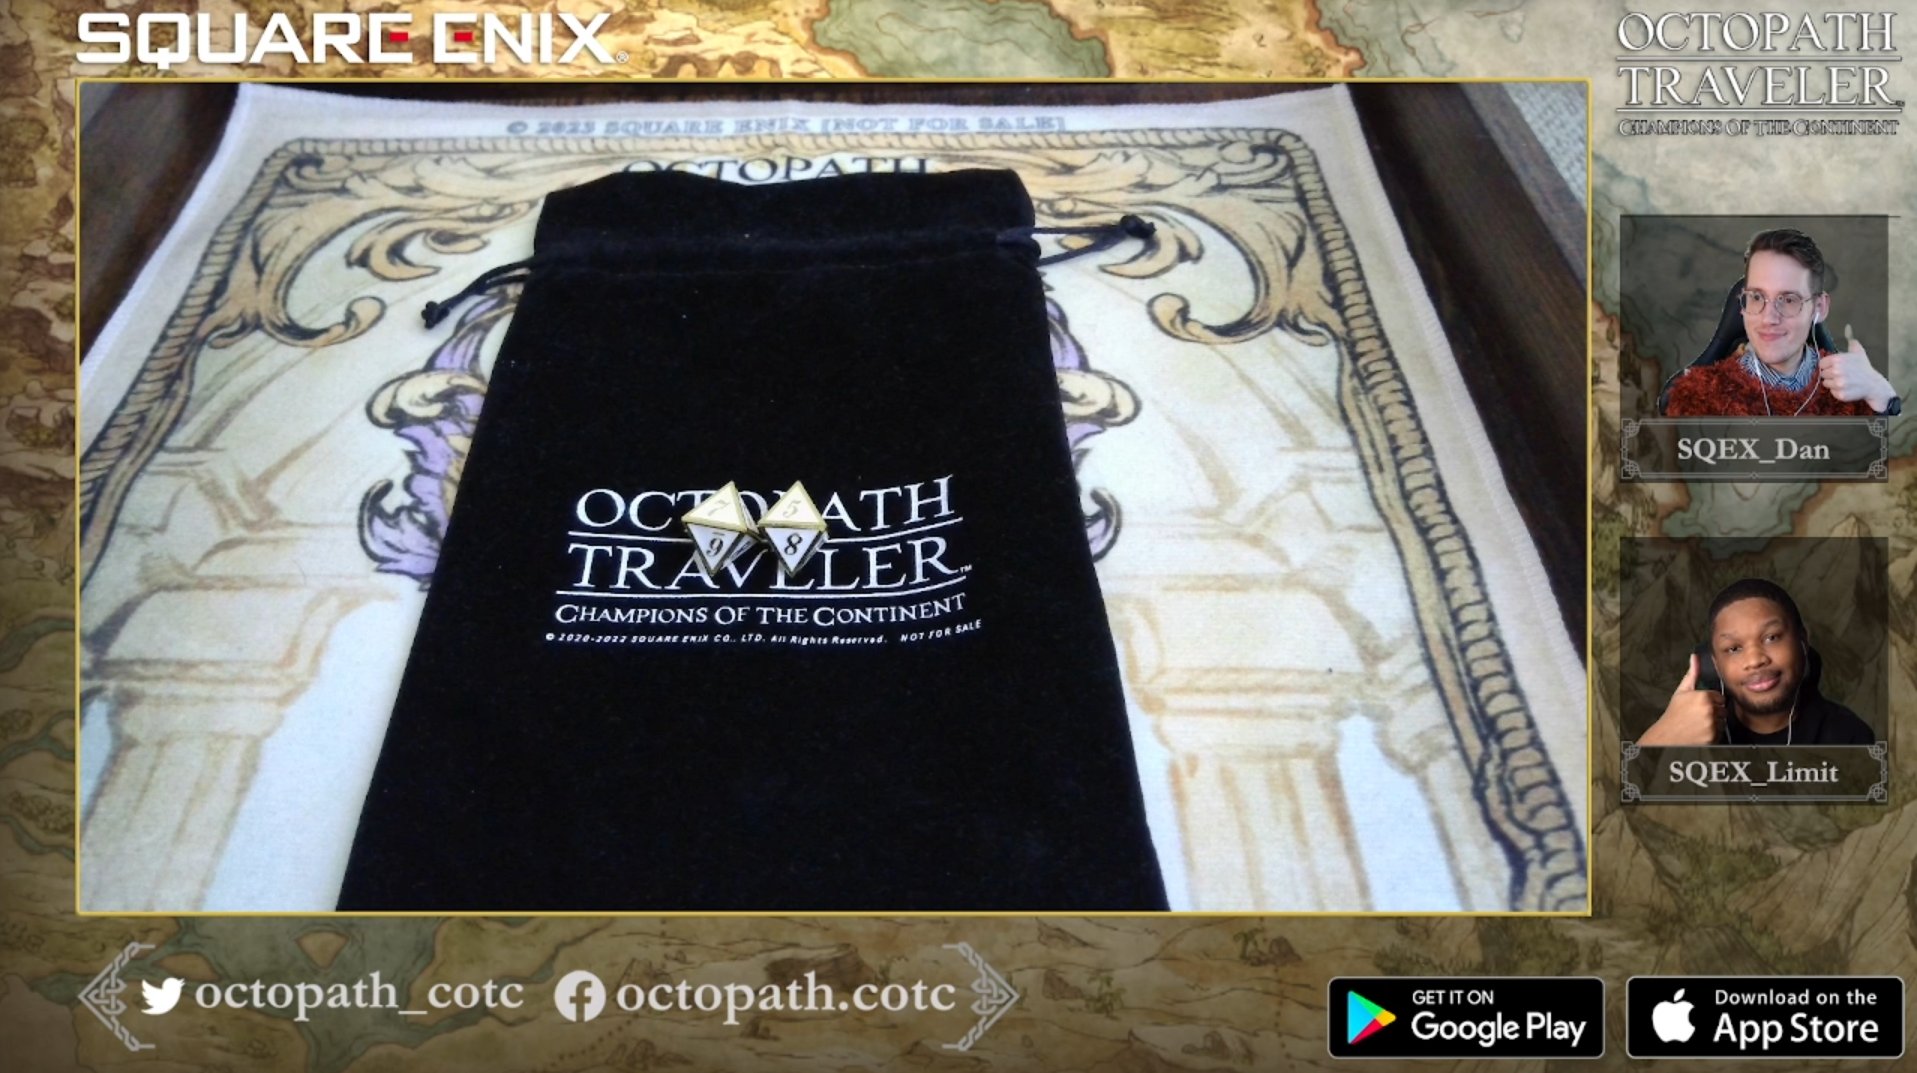 OCTOPATH TRAVELER: CotC na App Store